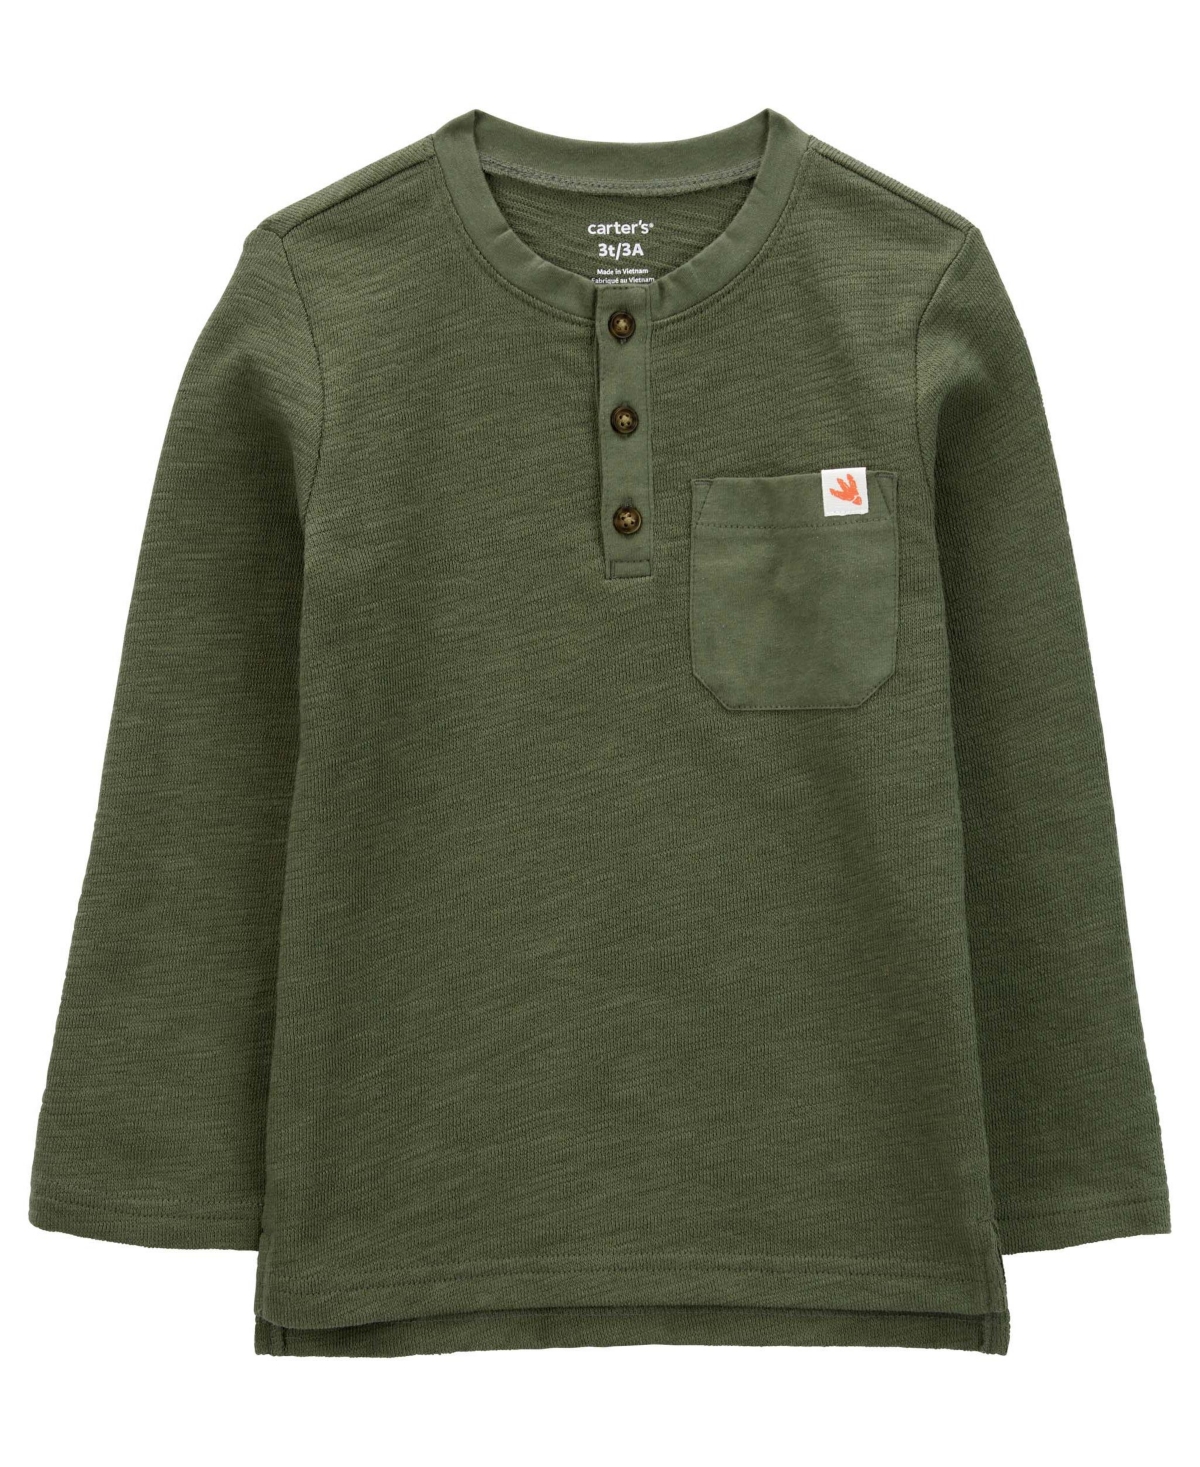 Carter's Babies' Toddler Boys Slub Jersey Pocket Henley Shirt In Green